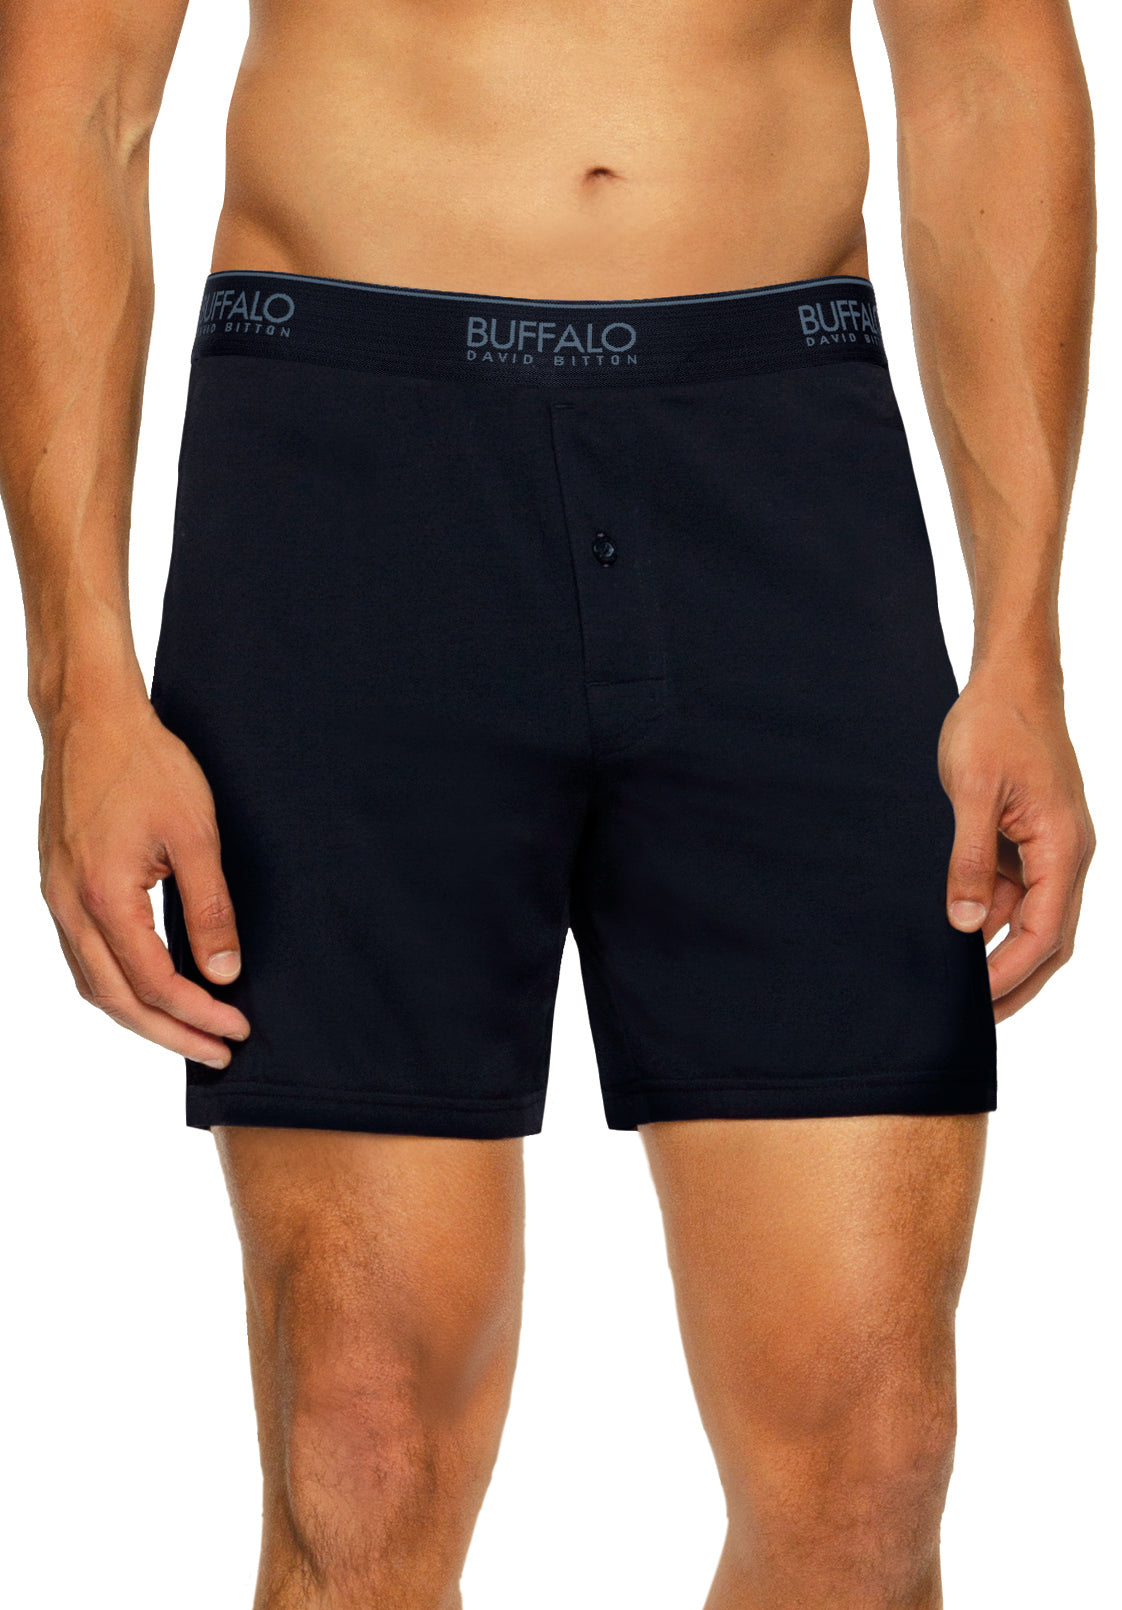 BUFFALO Men's Boxer briefs underwear knit cotton modal stretch XL (3 Pack)  - NWT